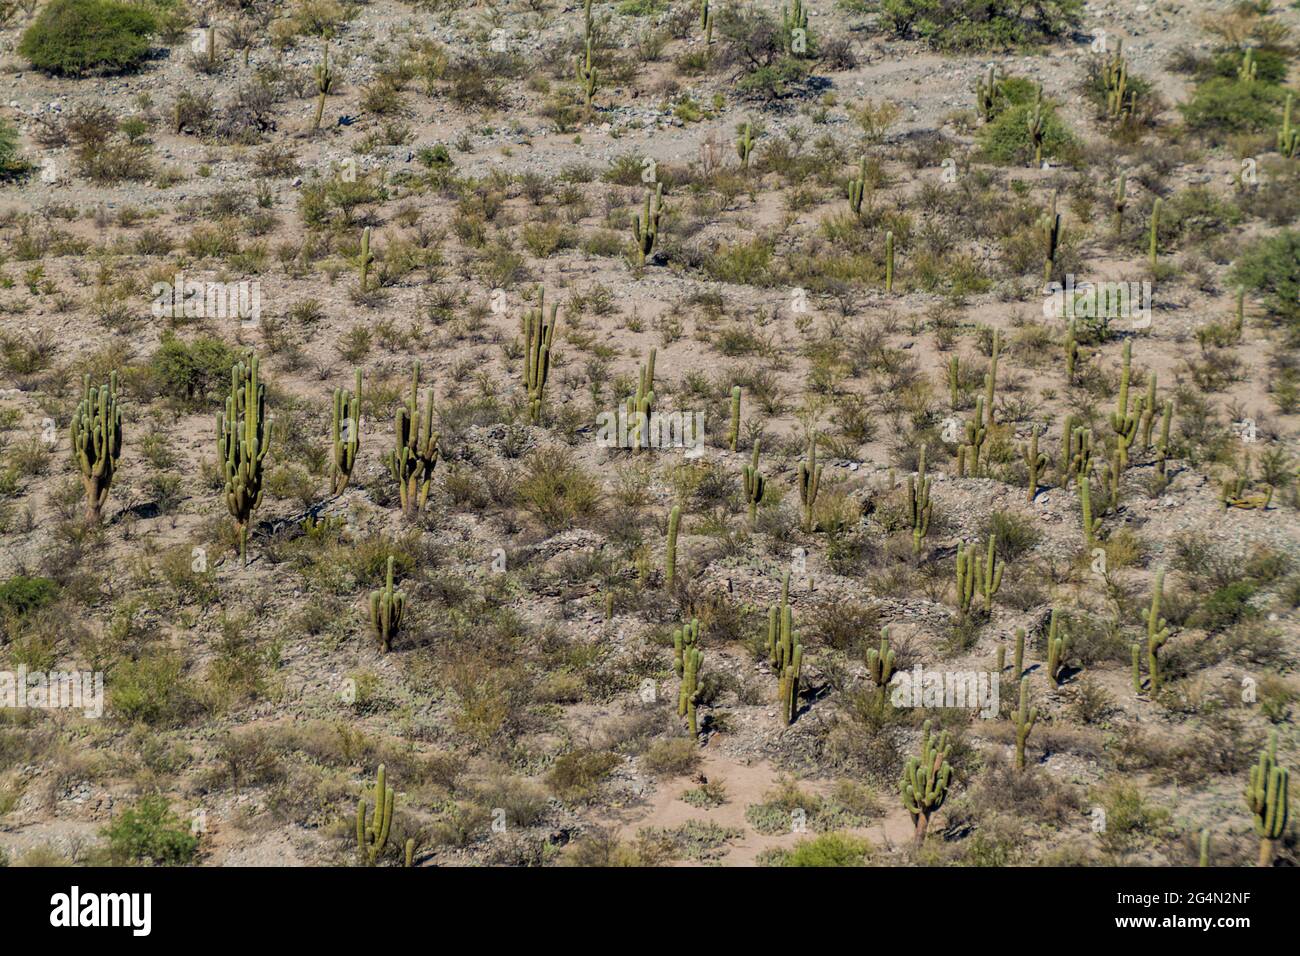 Cardon cacti near Quilmes ruins, Argentina Stock Photo